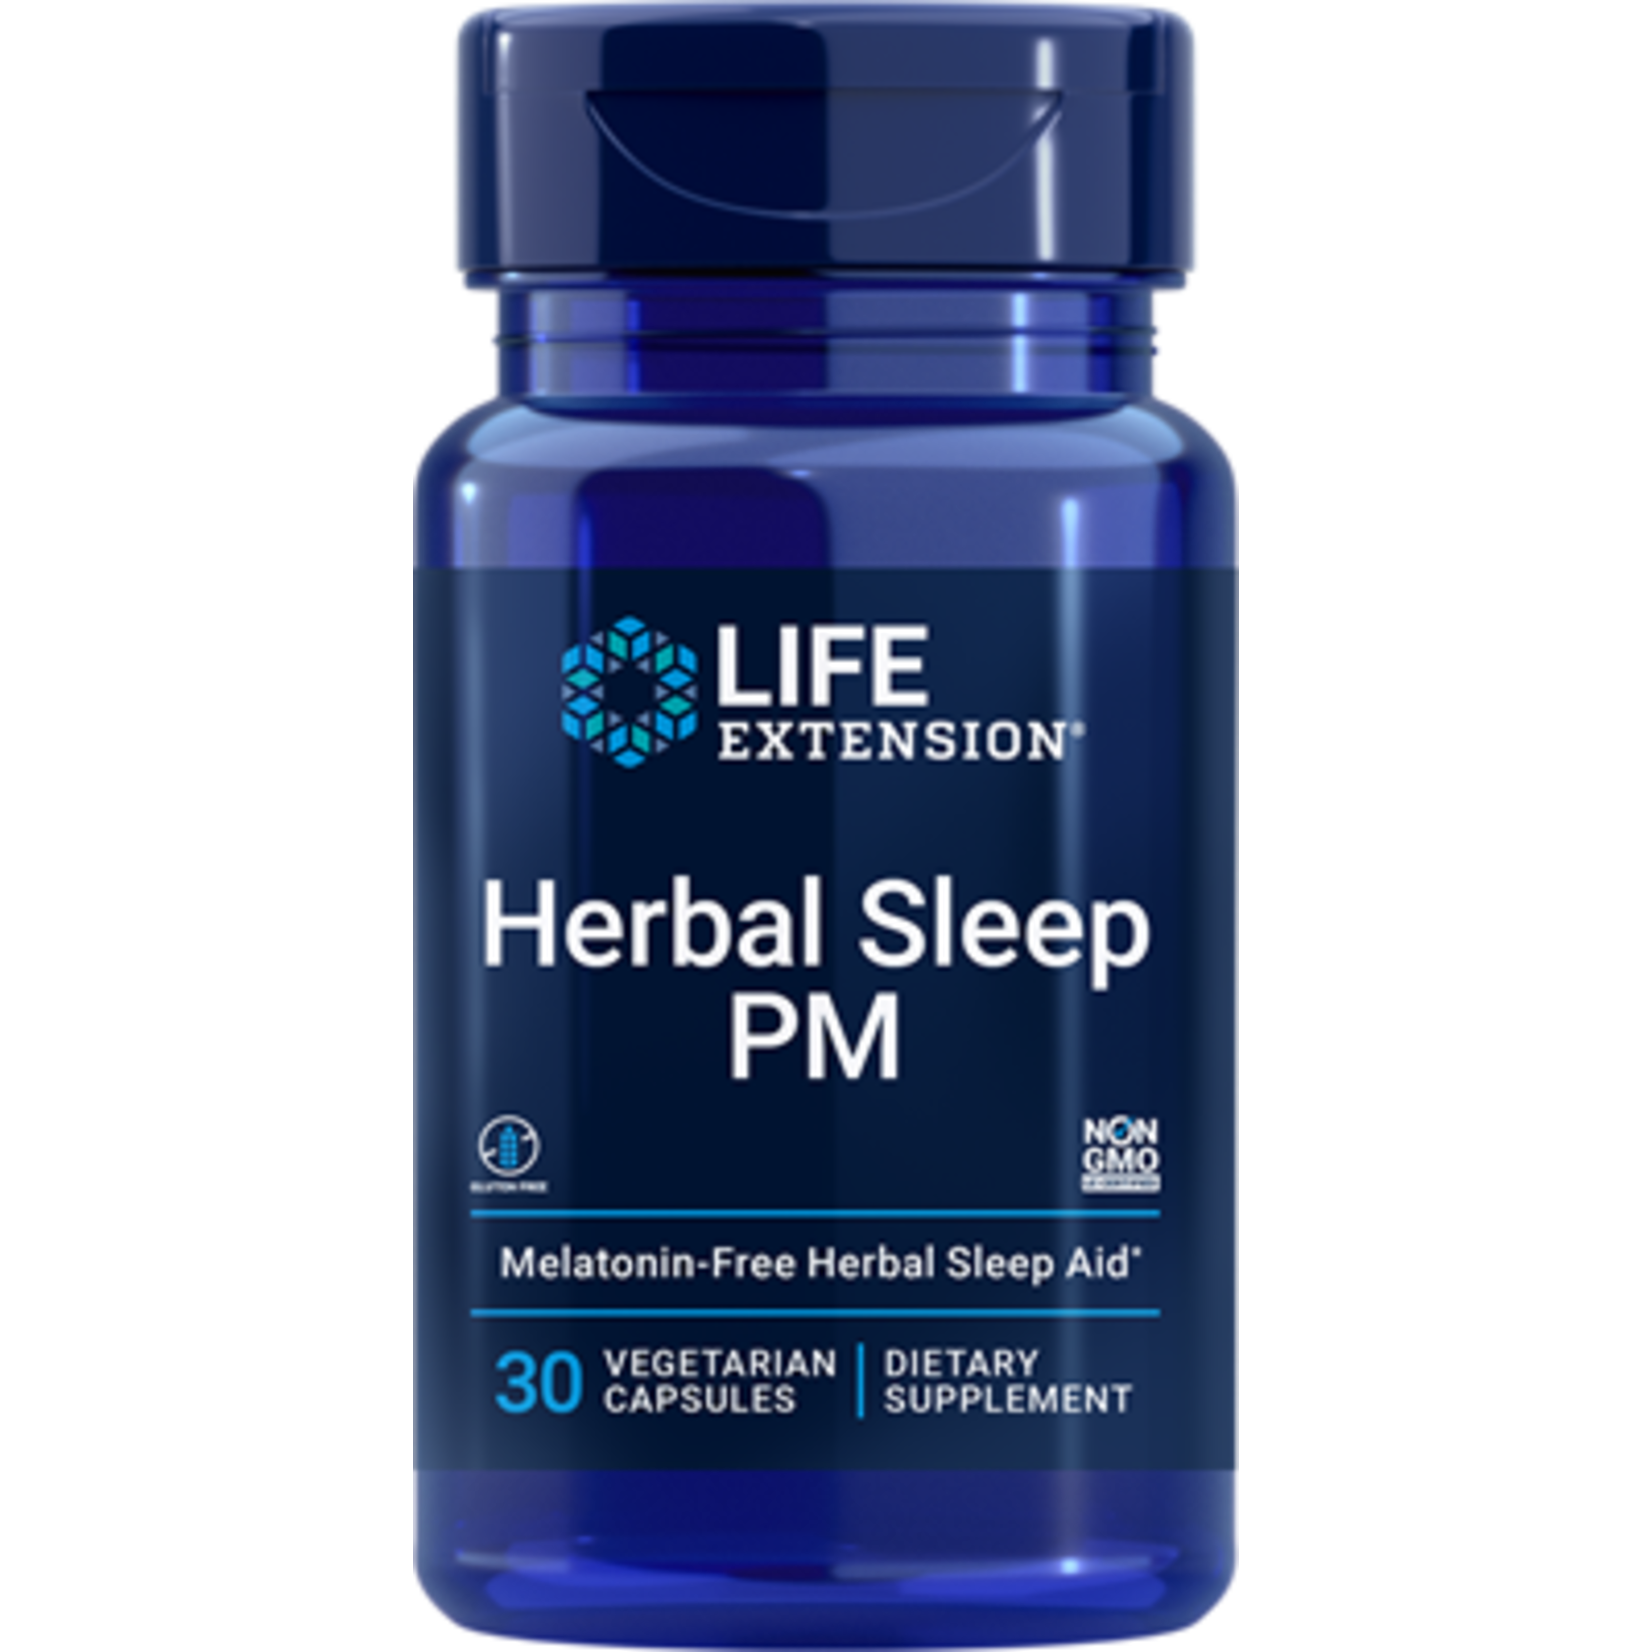 Life Extension Life Extension - Herbal Sleep Pm - 30 Veg Capsules